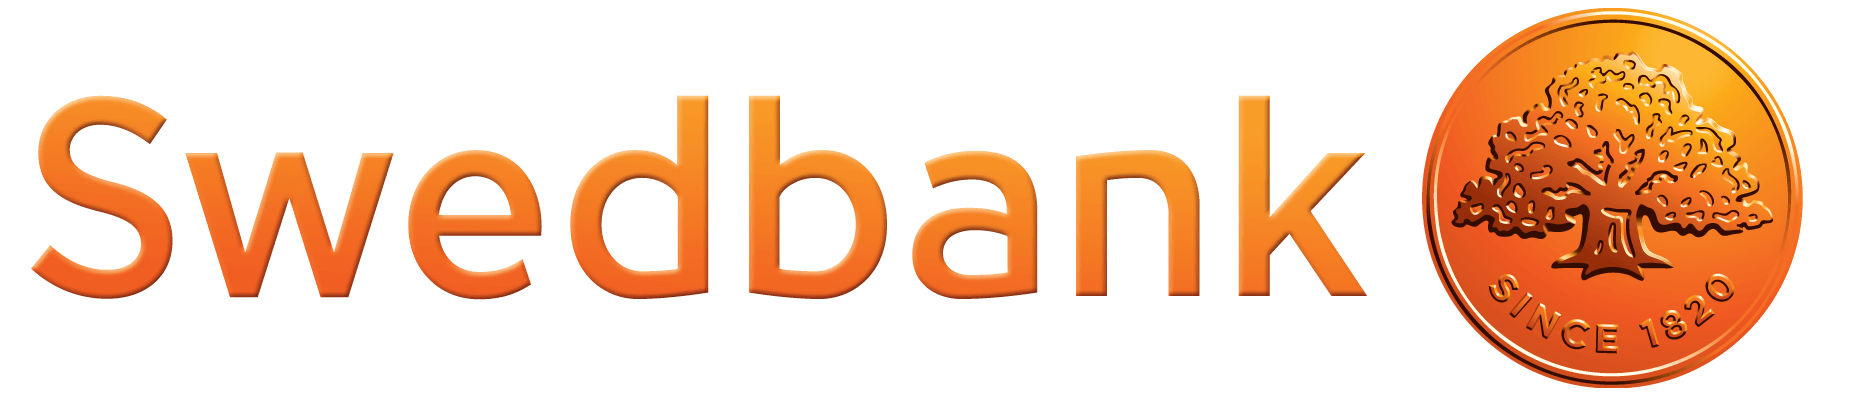 Swedbank_logo_logotype_emblem